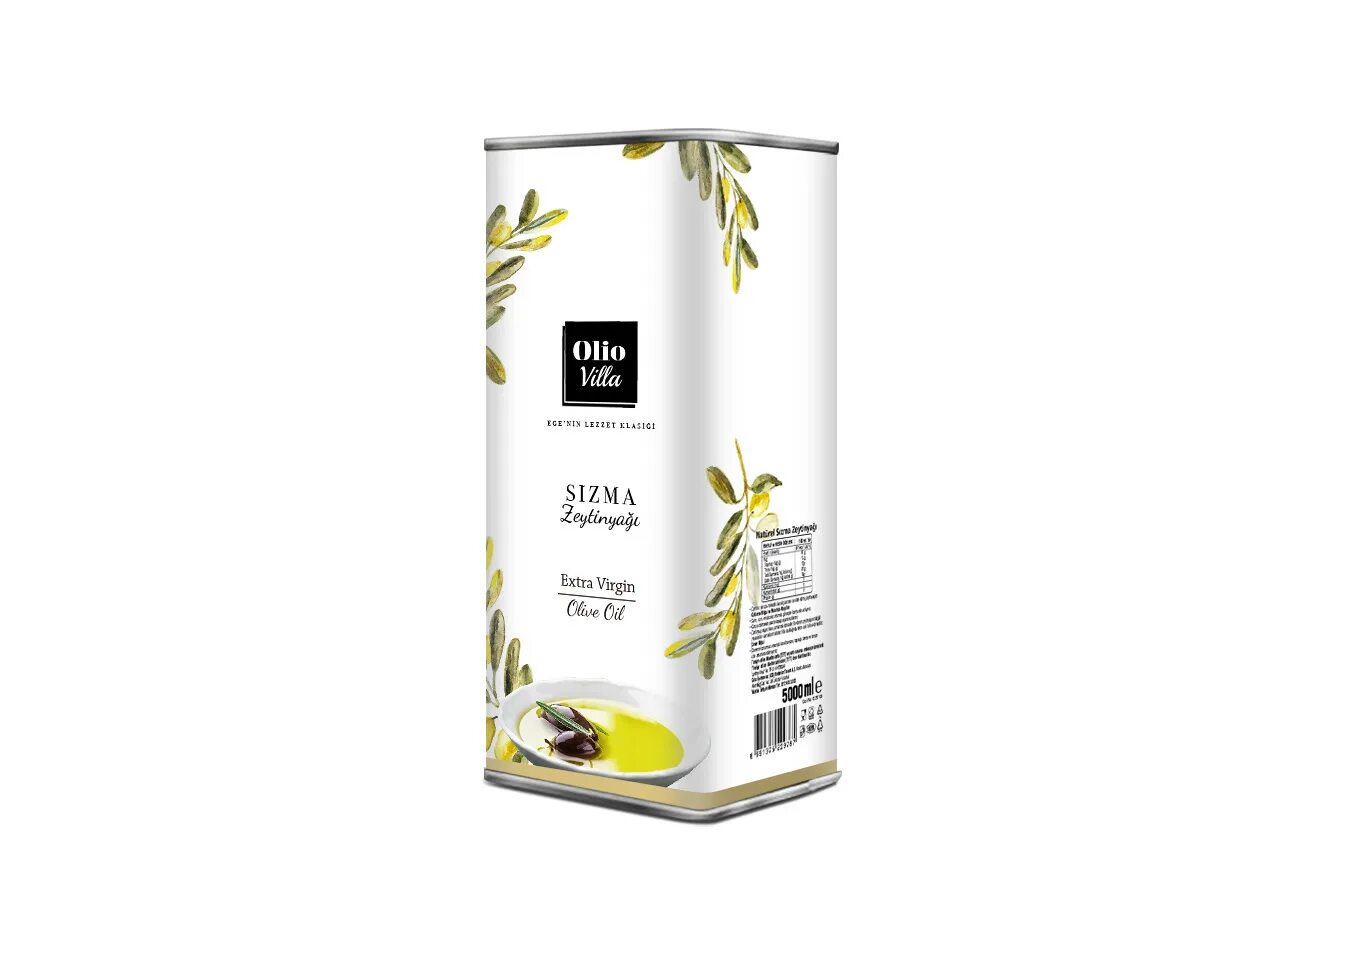 Оливковое масло упаковка. Масло оливковое дизайн упаковки. Оливковое масло дизайн. Красивая упаковка масла оливкового.